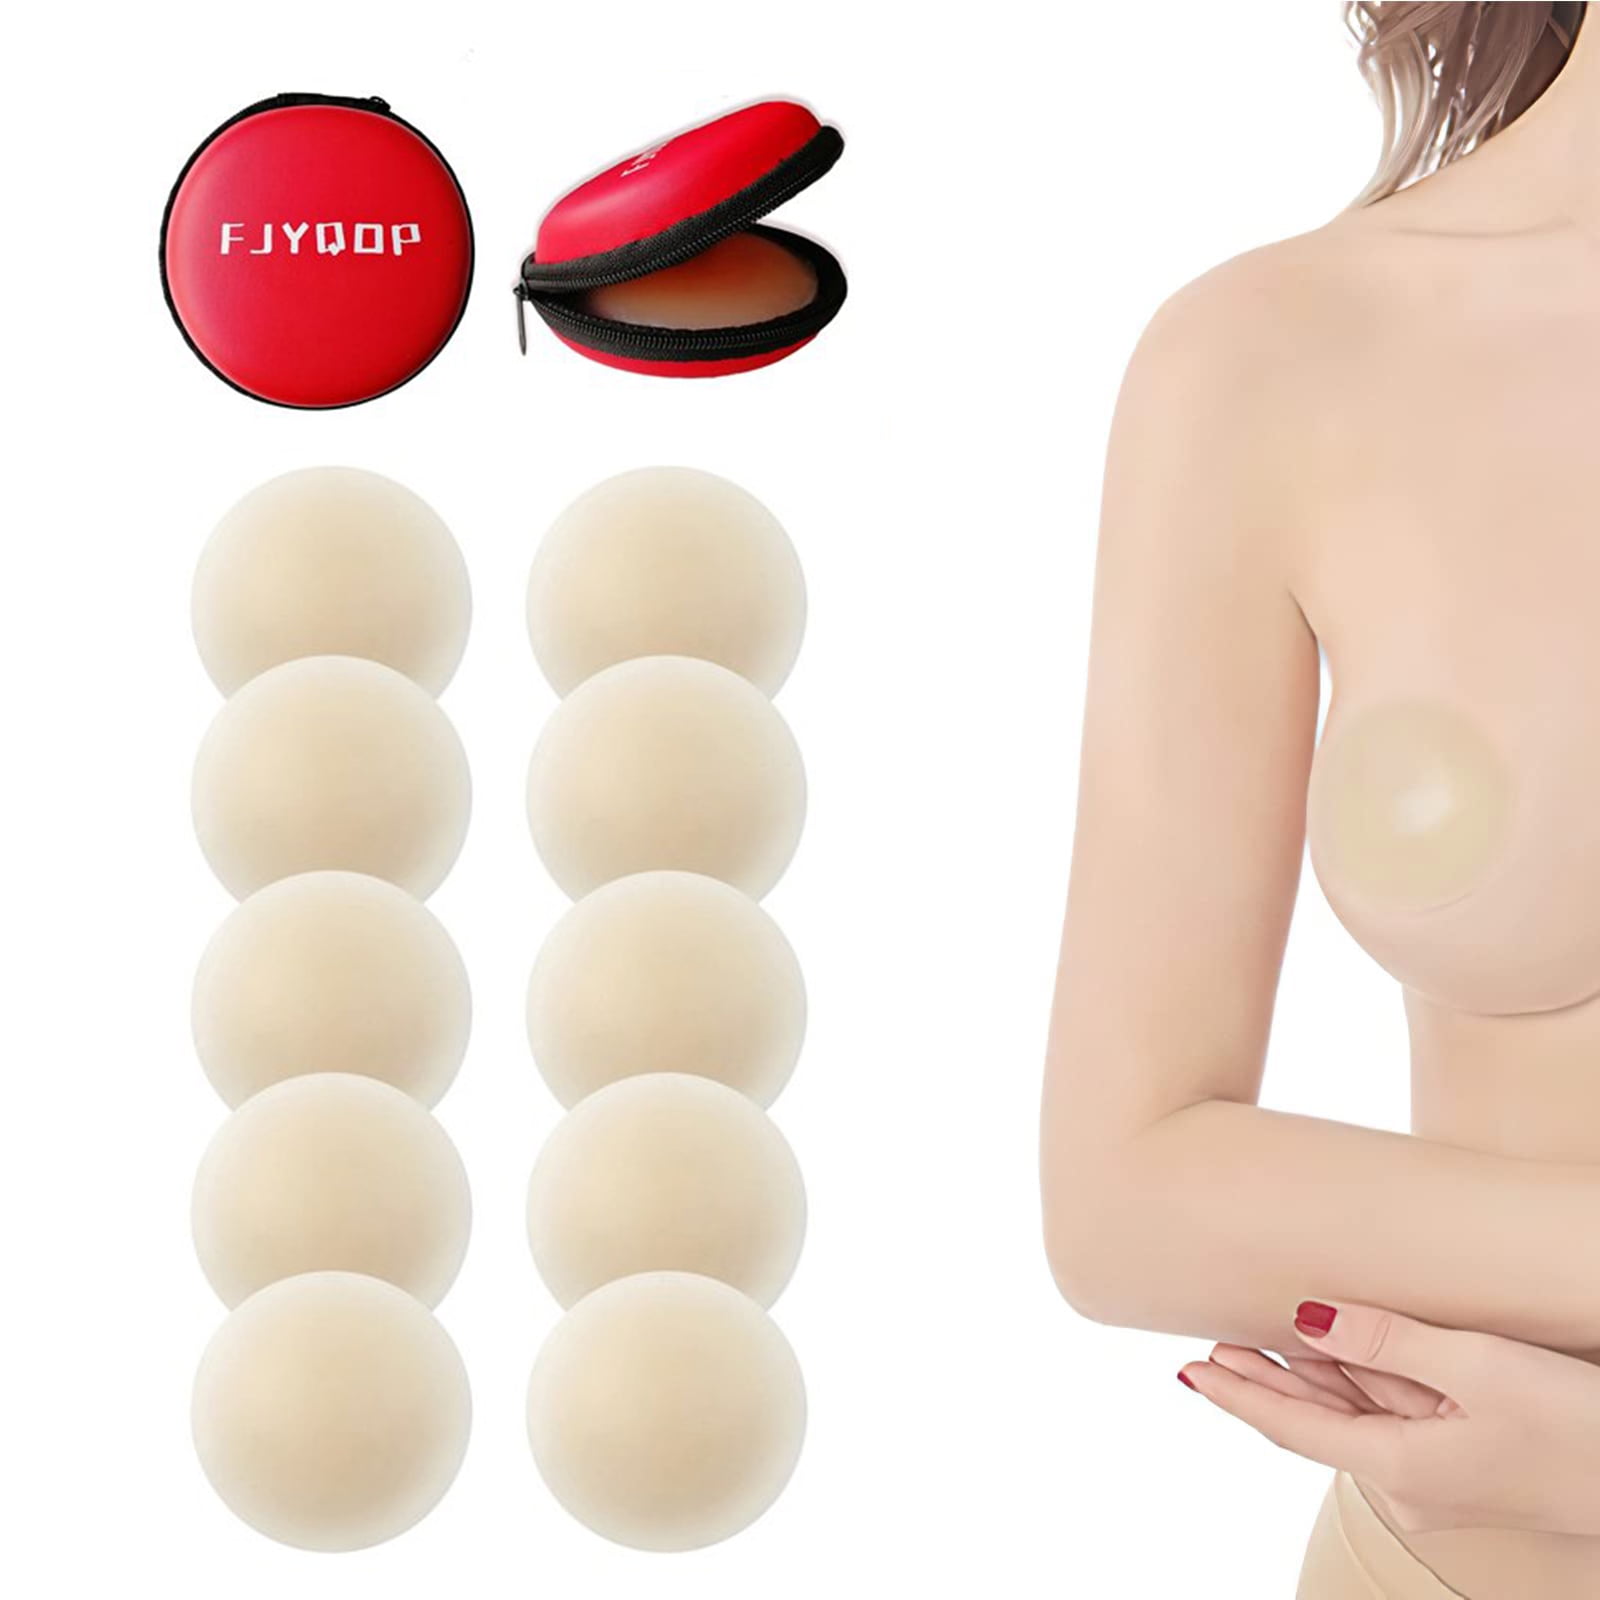 FJYQOP Silicone Adhesive Bra - 5 Pairs, Women's Reusable Adhesive